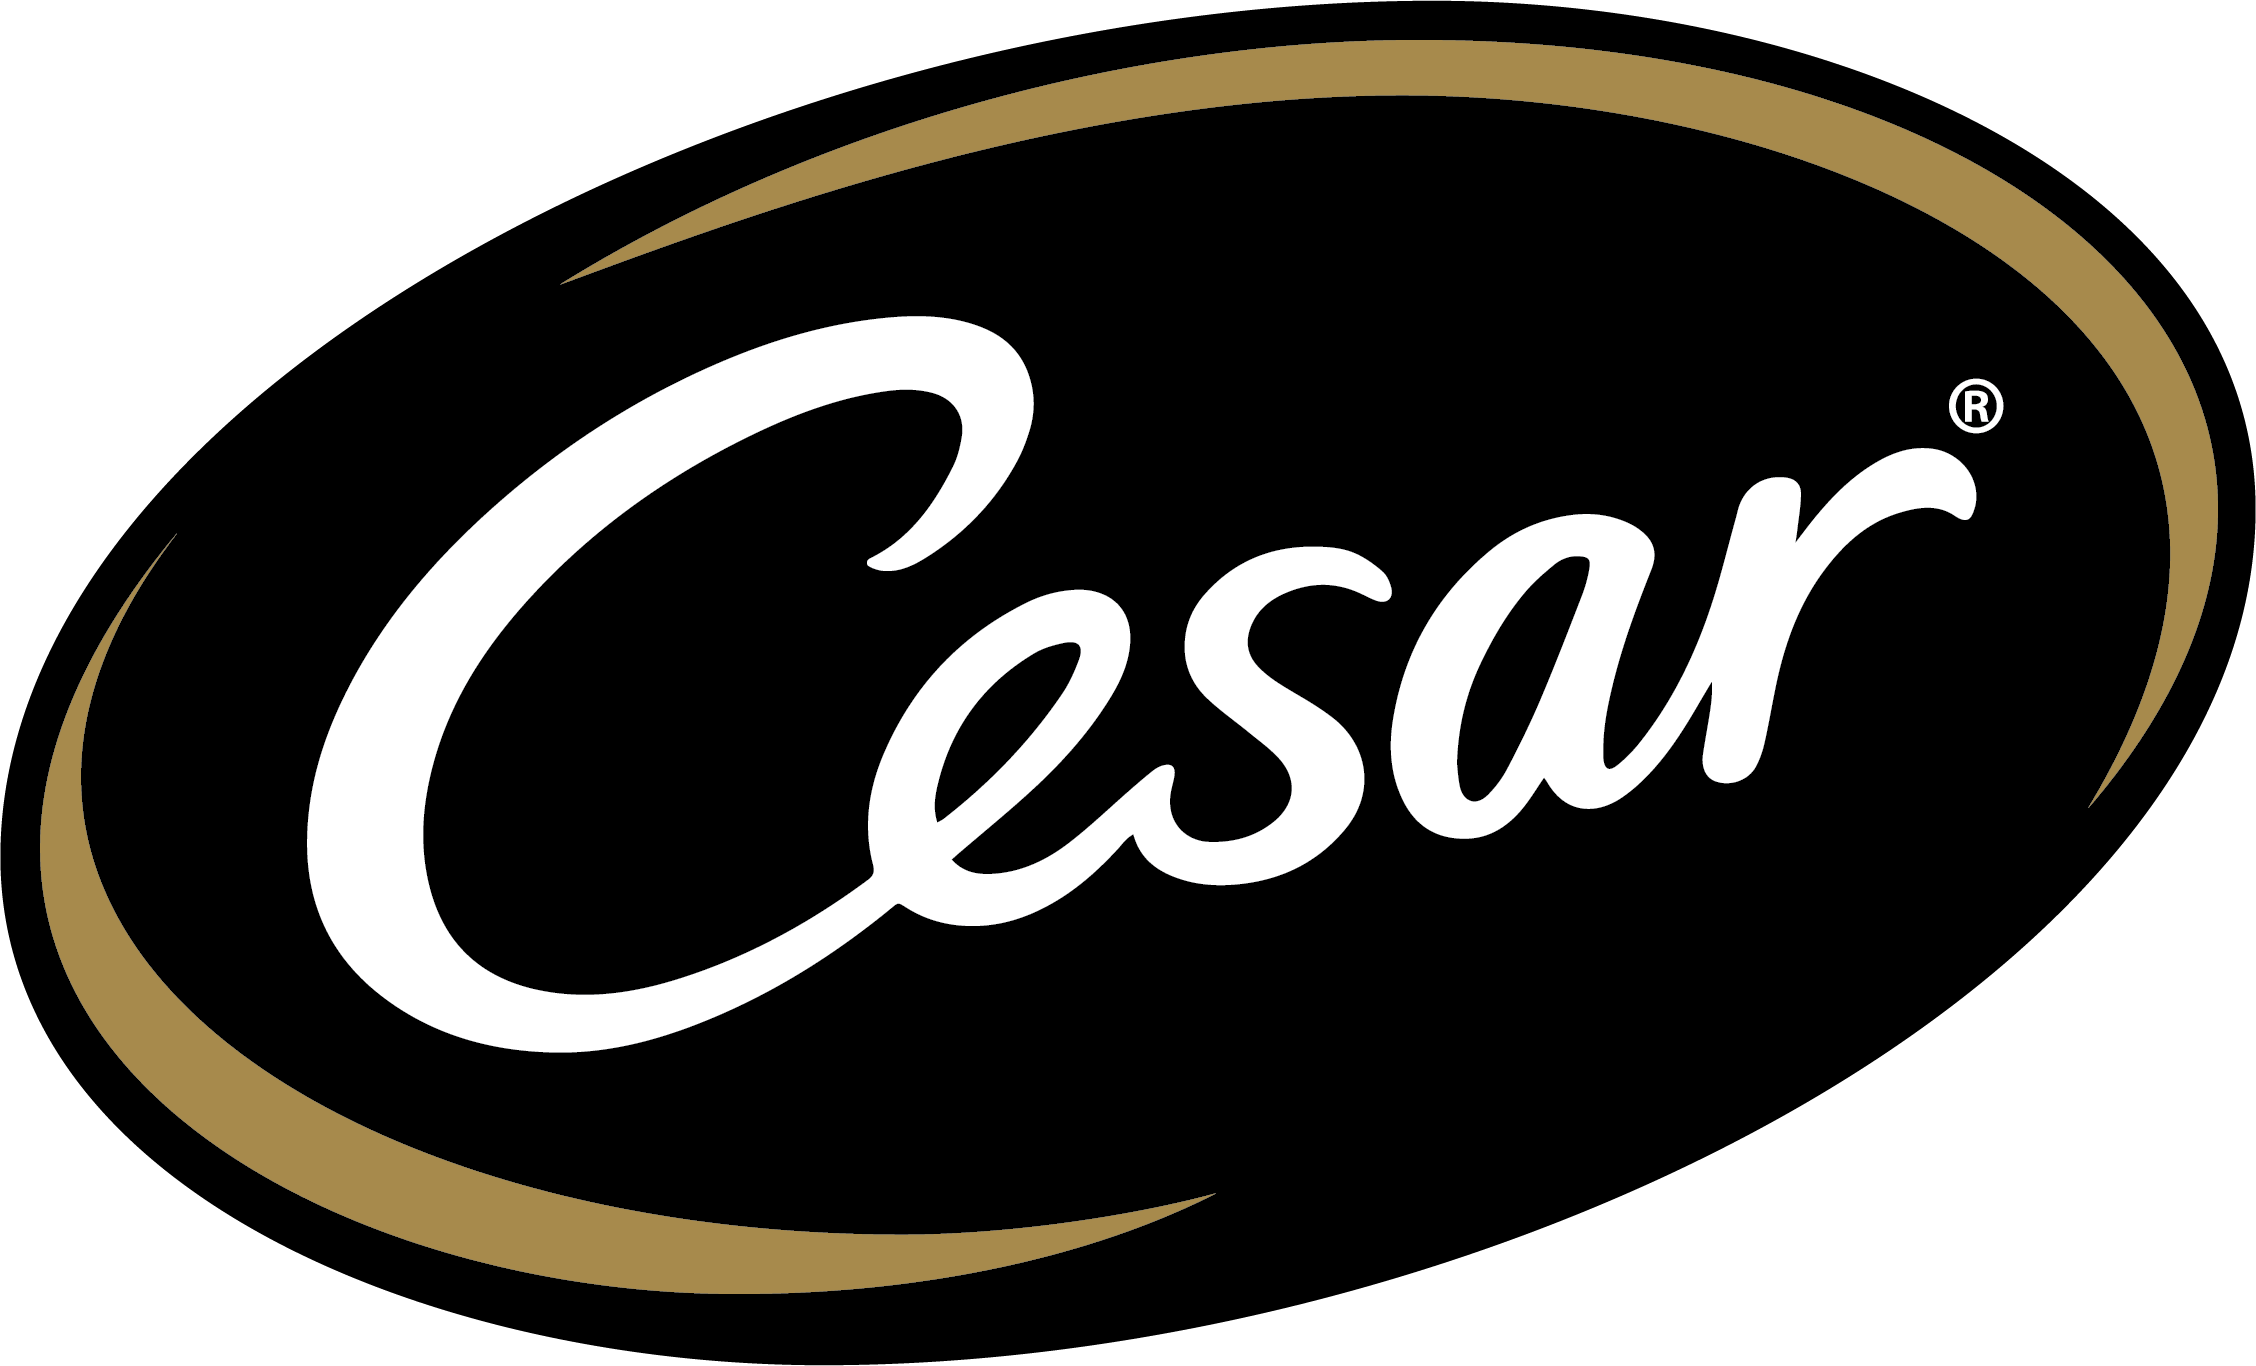 Cesar Core logo.png